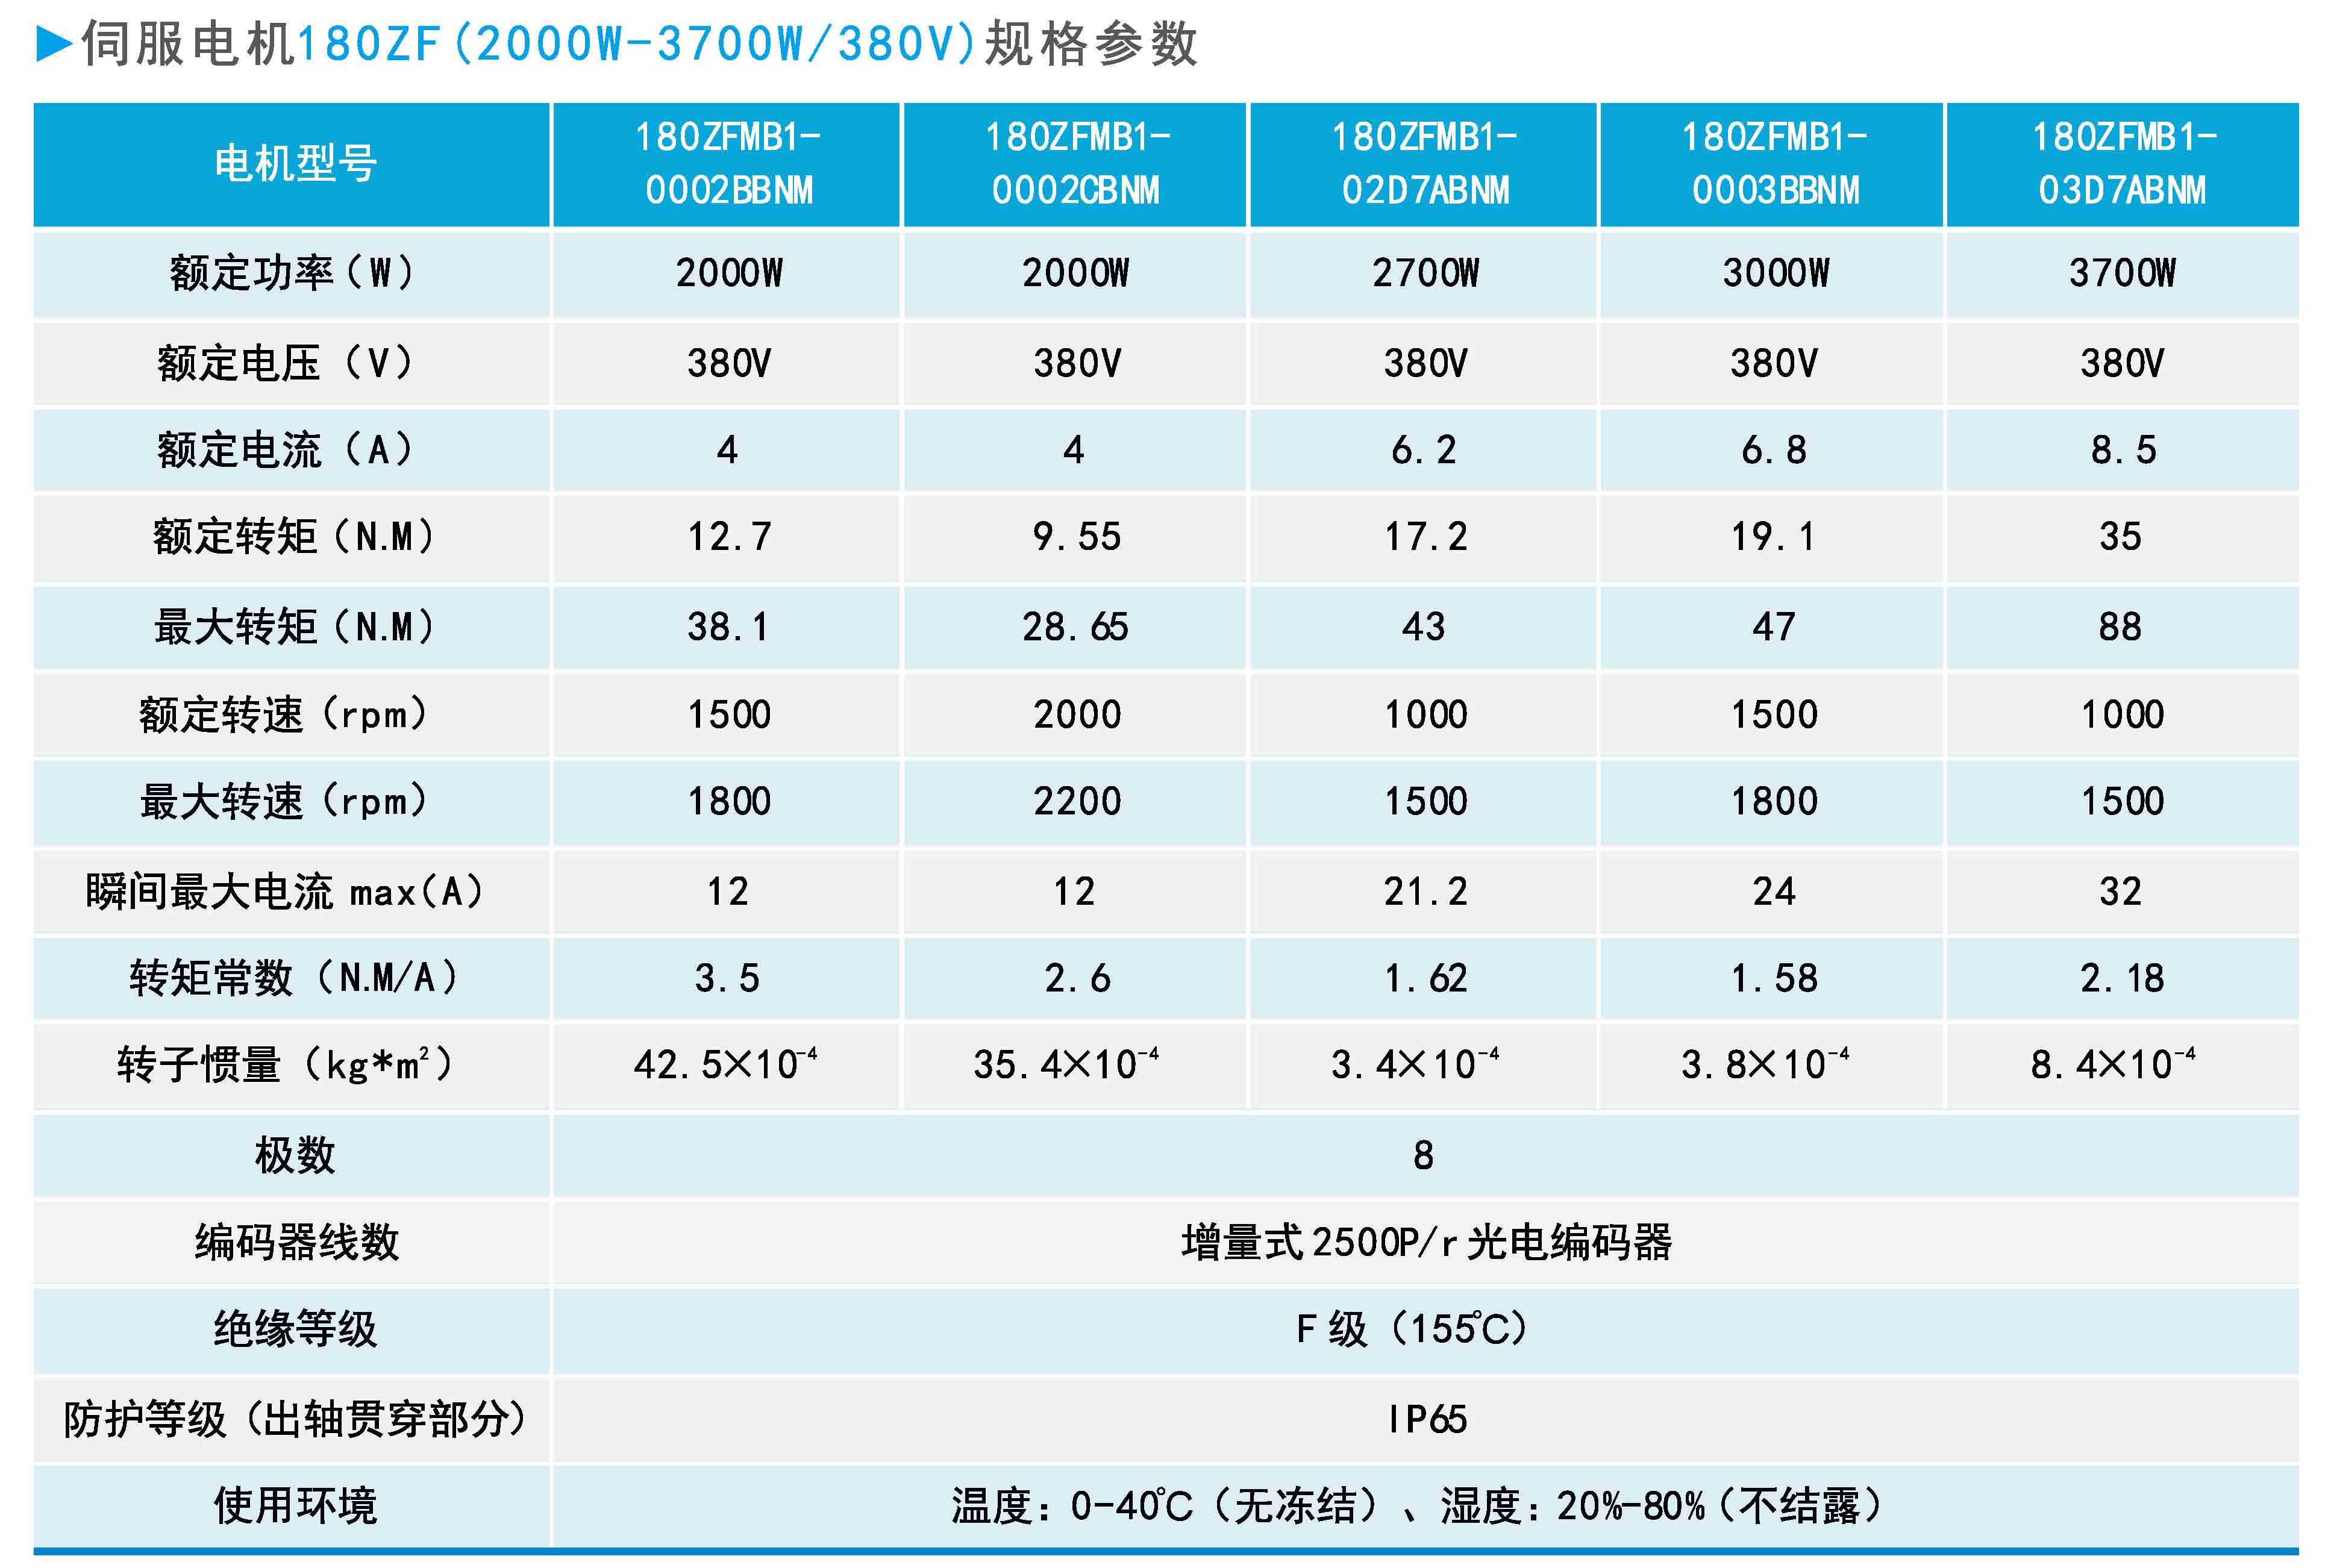 zf180(2000w-3700w 380v)系列通用型伺服电机规格参数.jpg